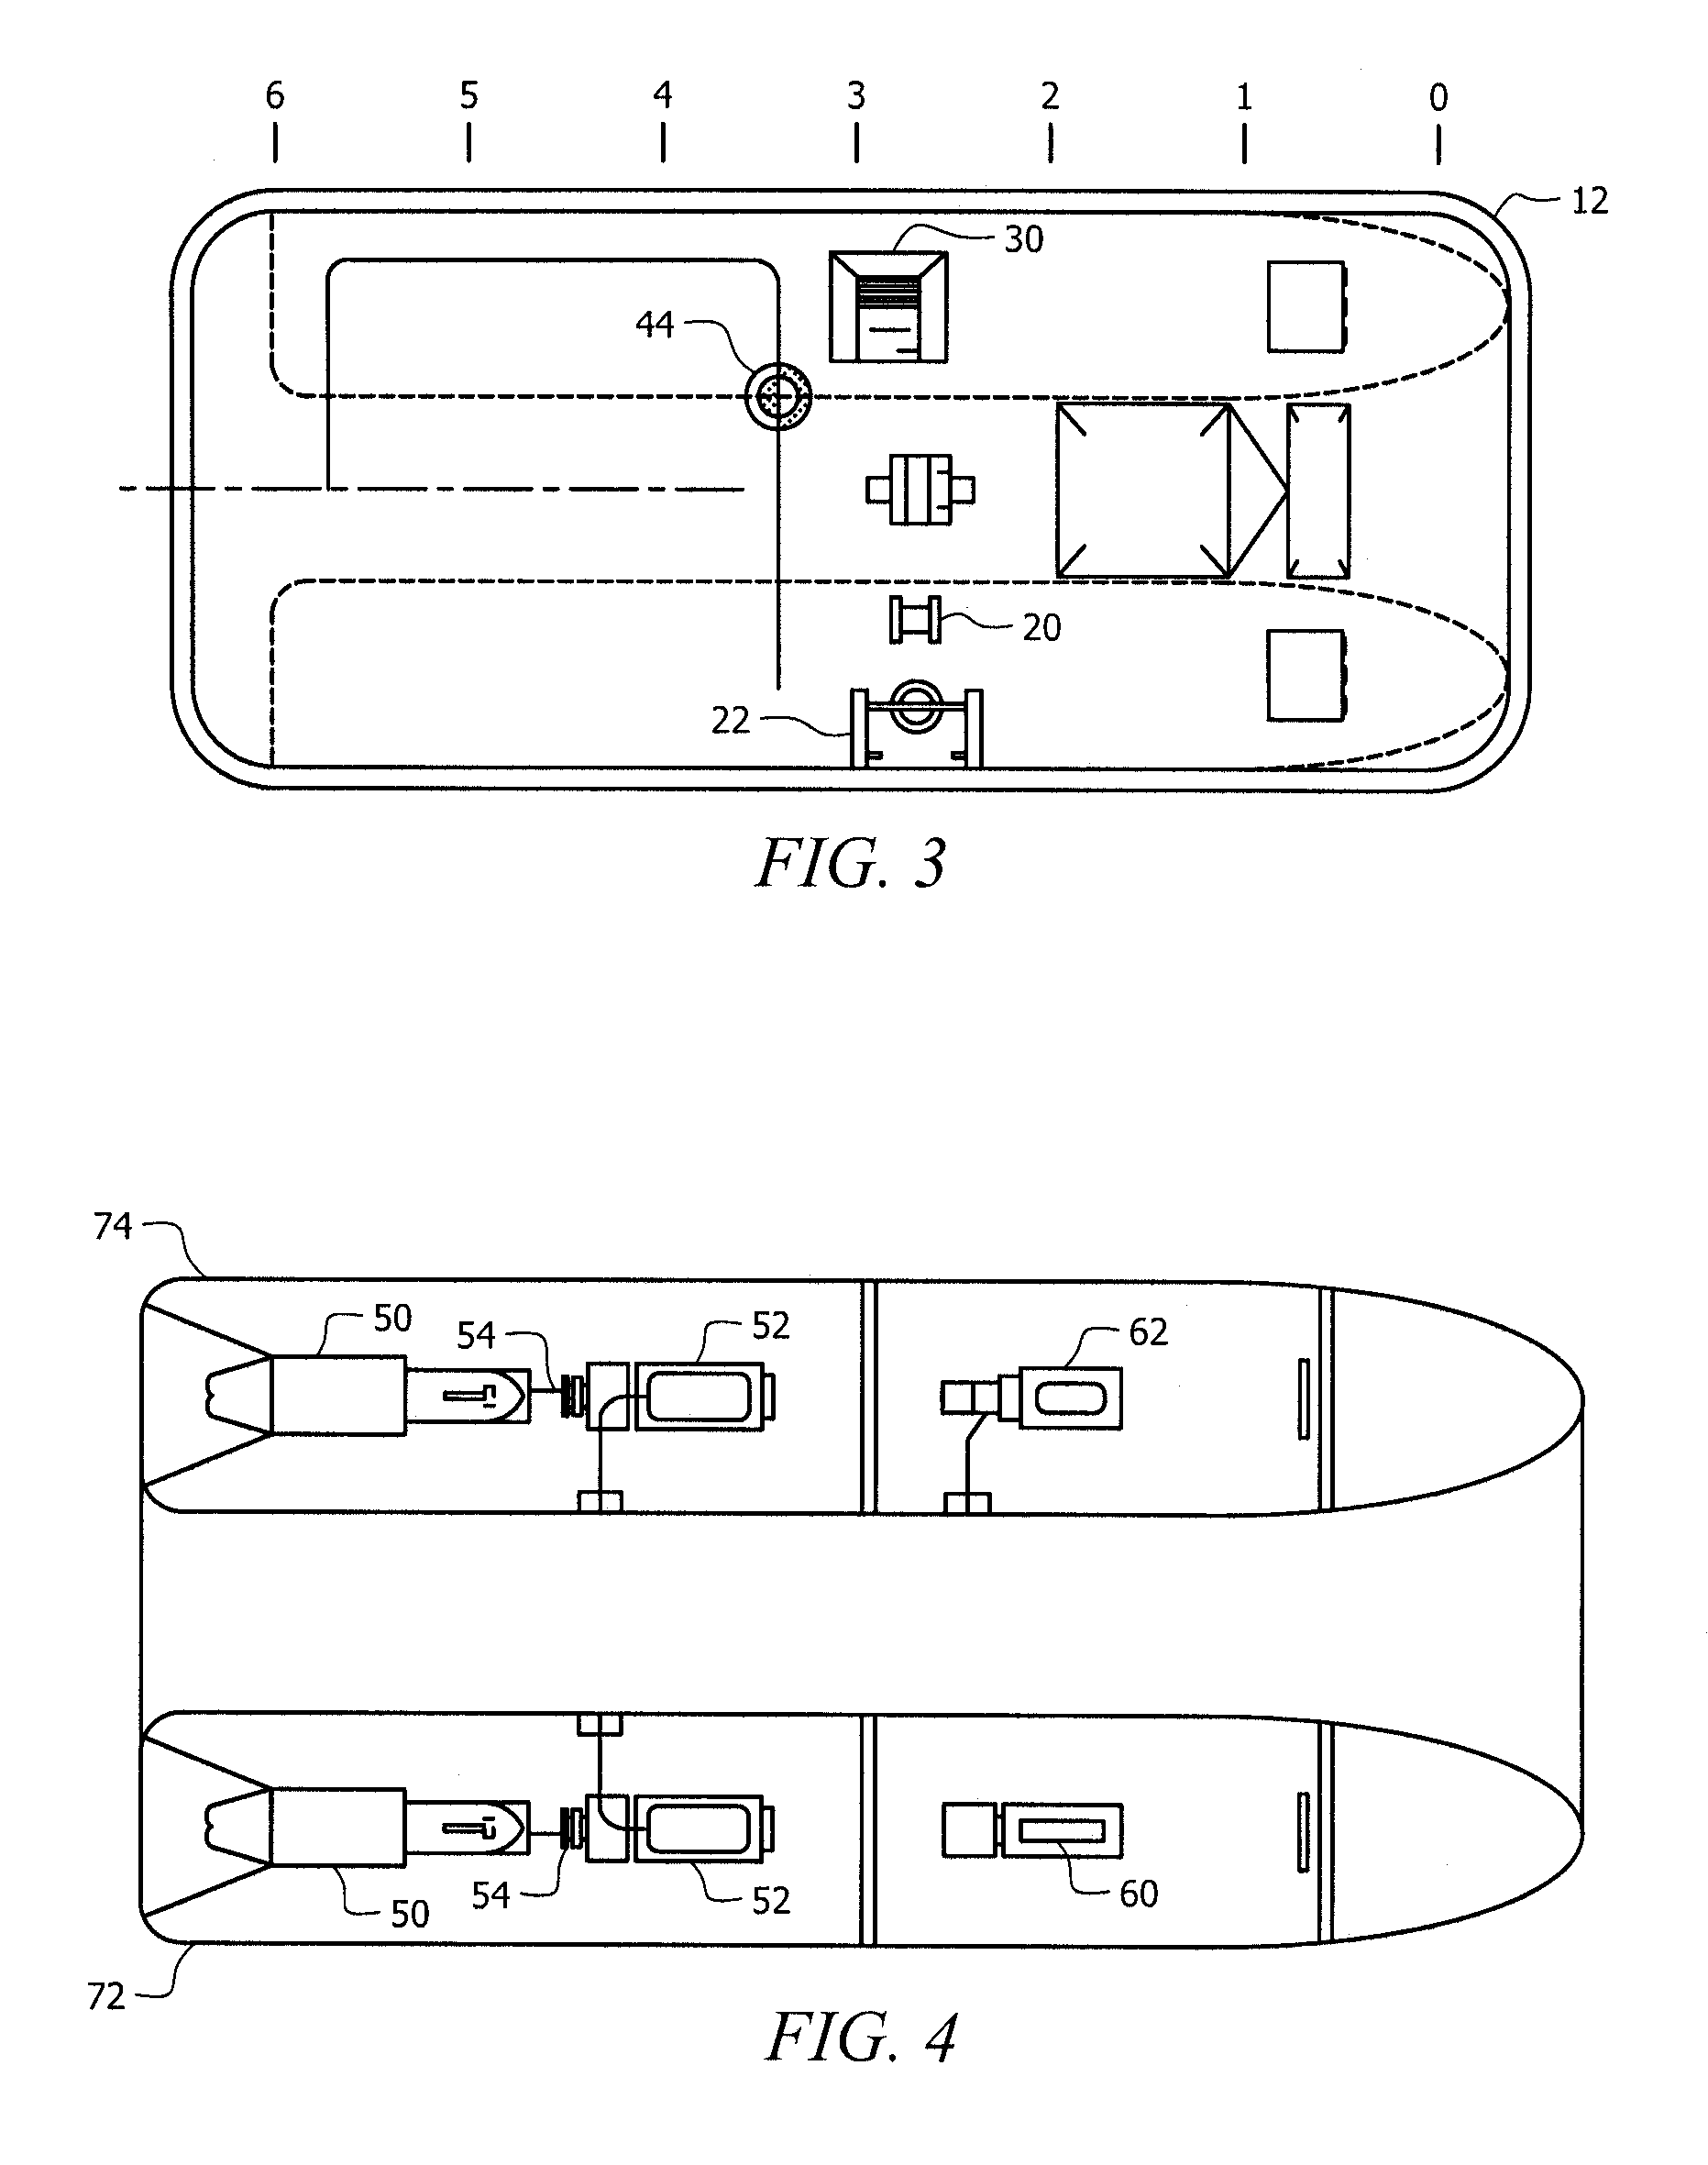 Multihull fishing vessel and method of use